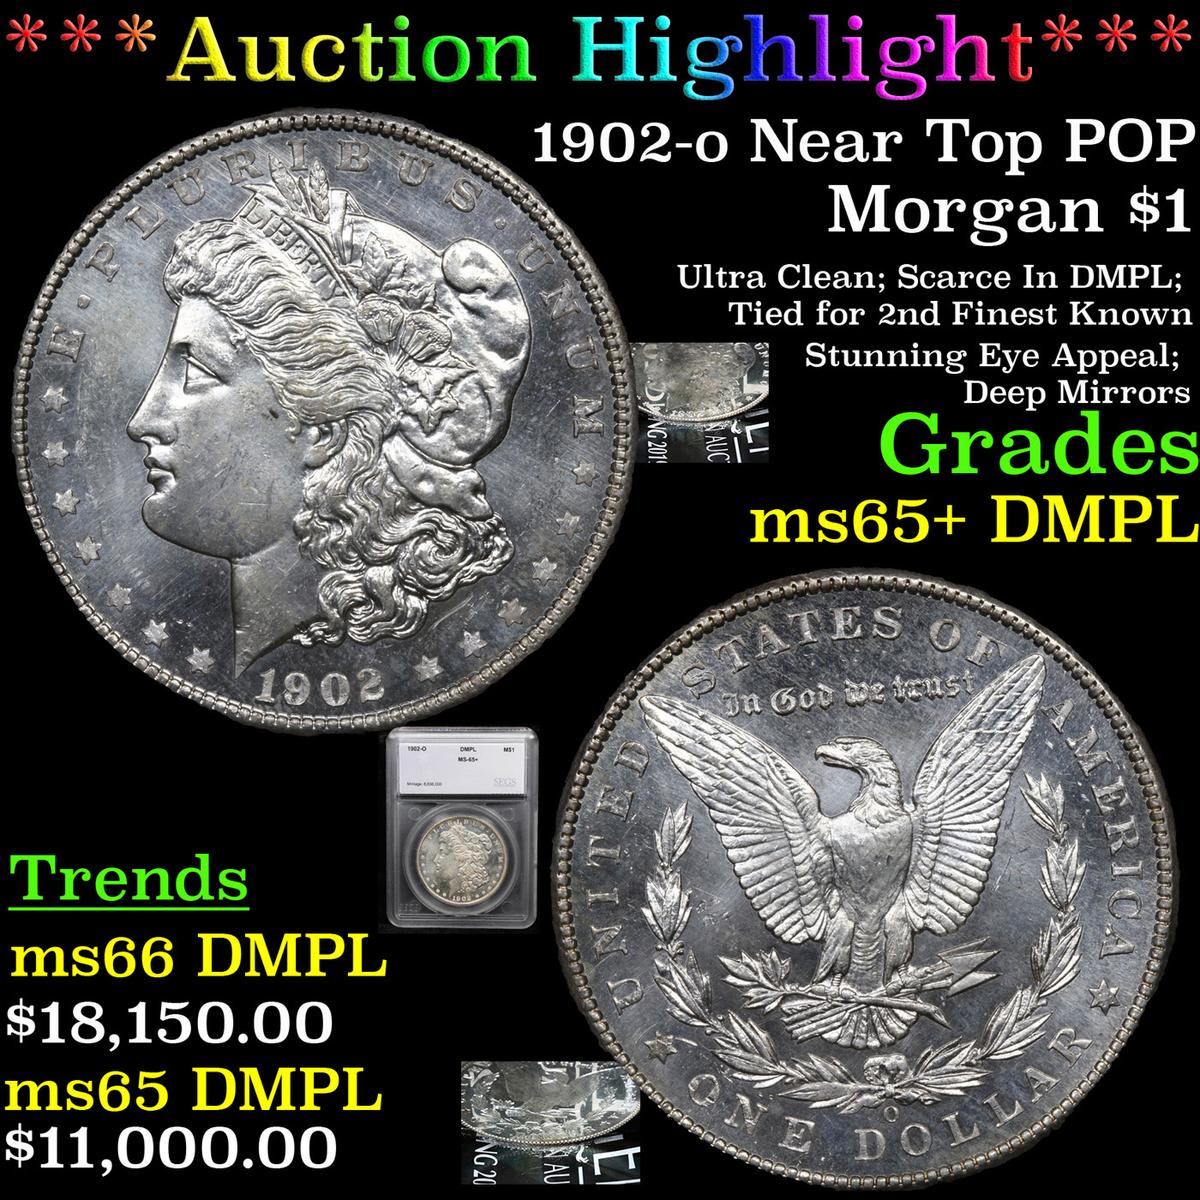 ***Auction Highlight*** 1902-o Near Top POP Morgan Dollar $1 Graded ms65+ DMPL By SEGS (fc)